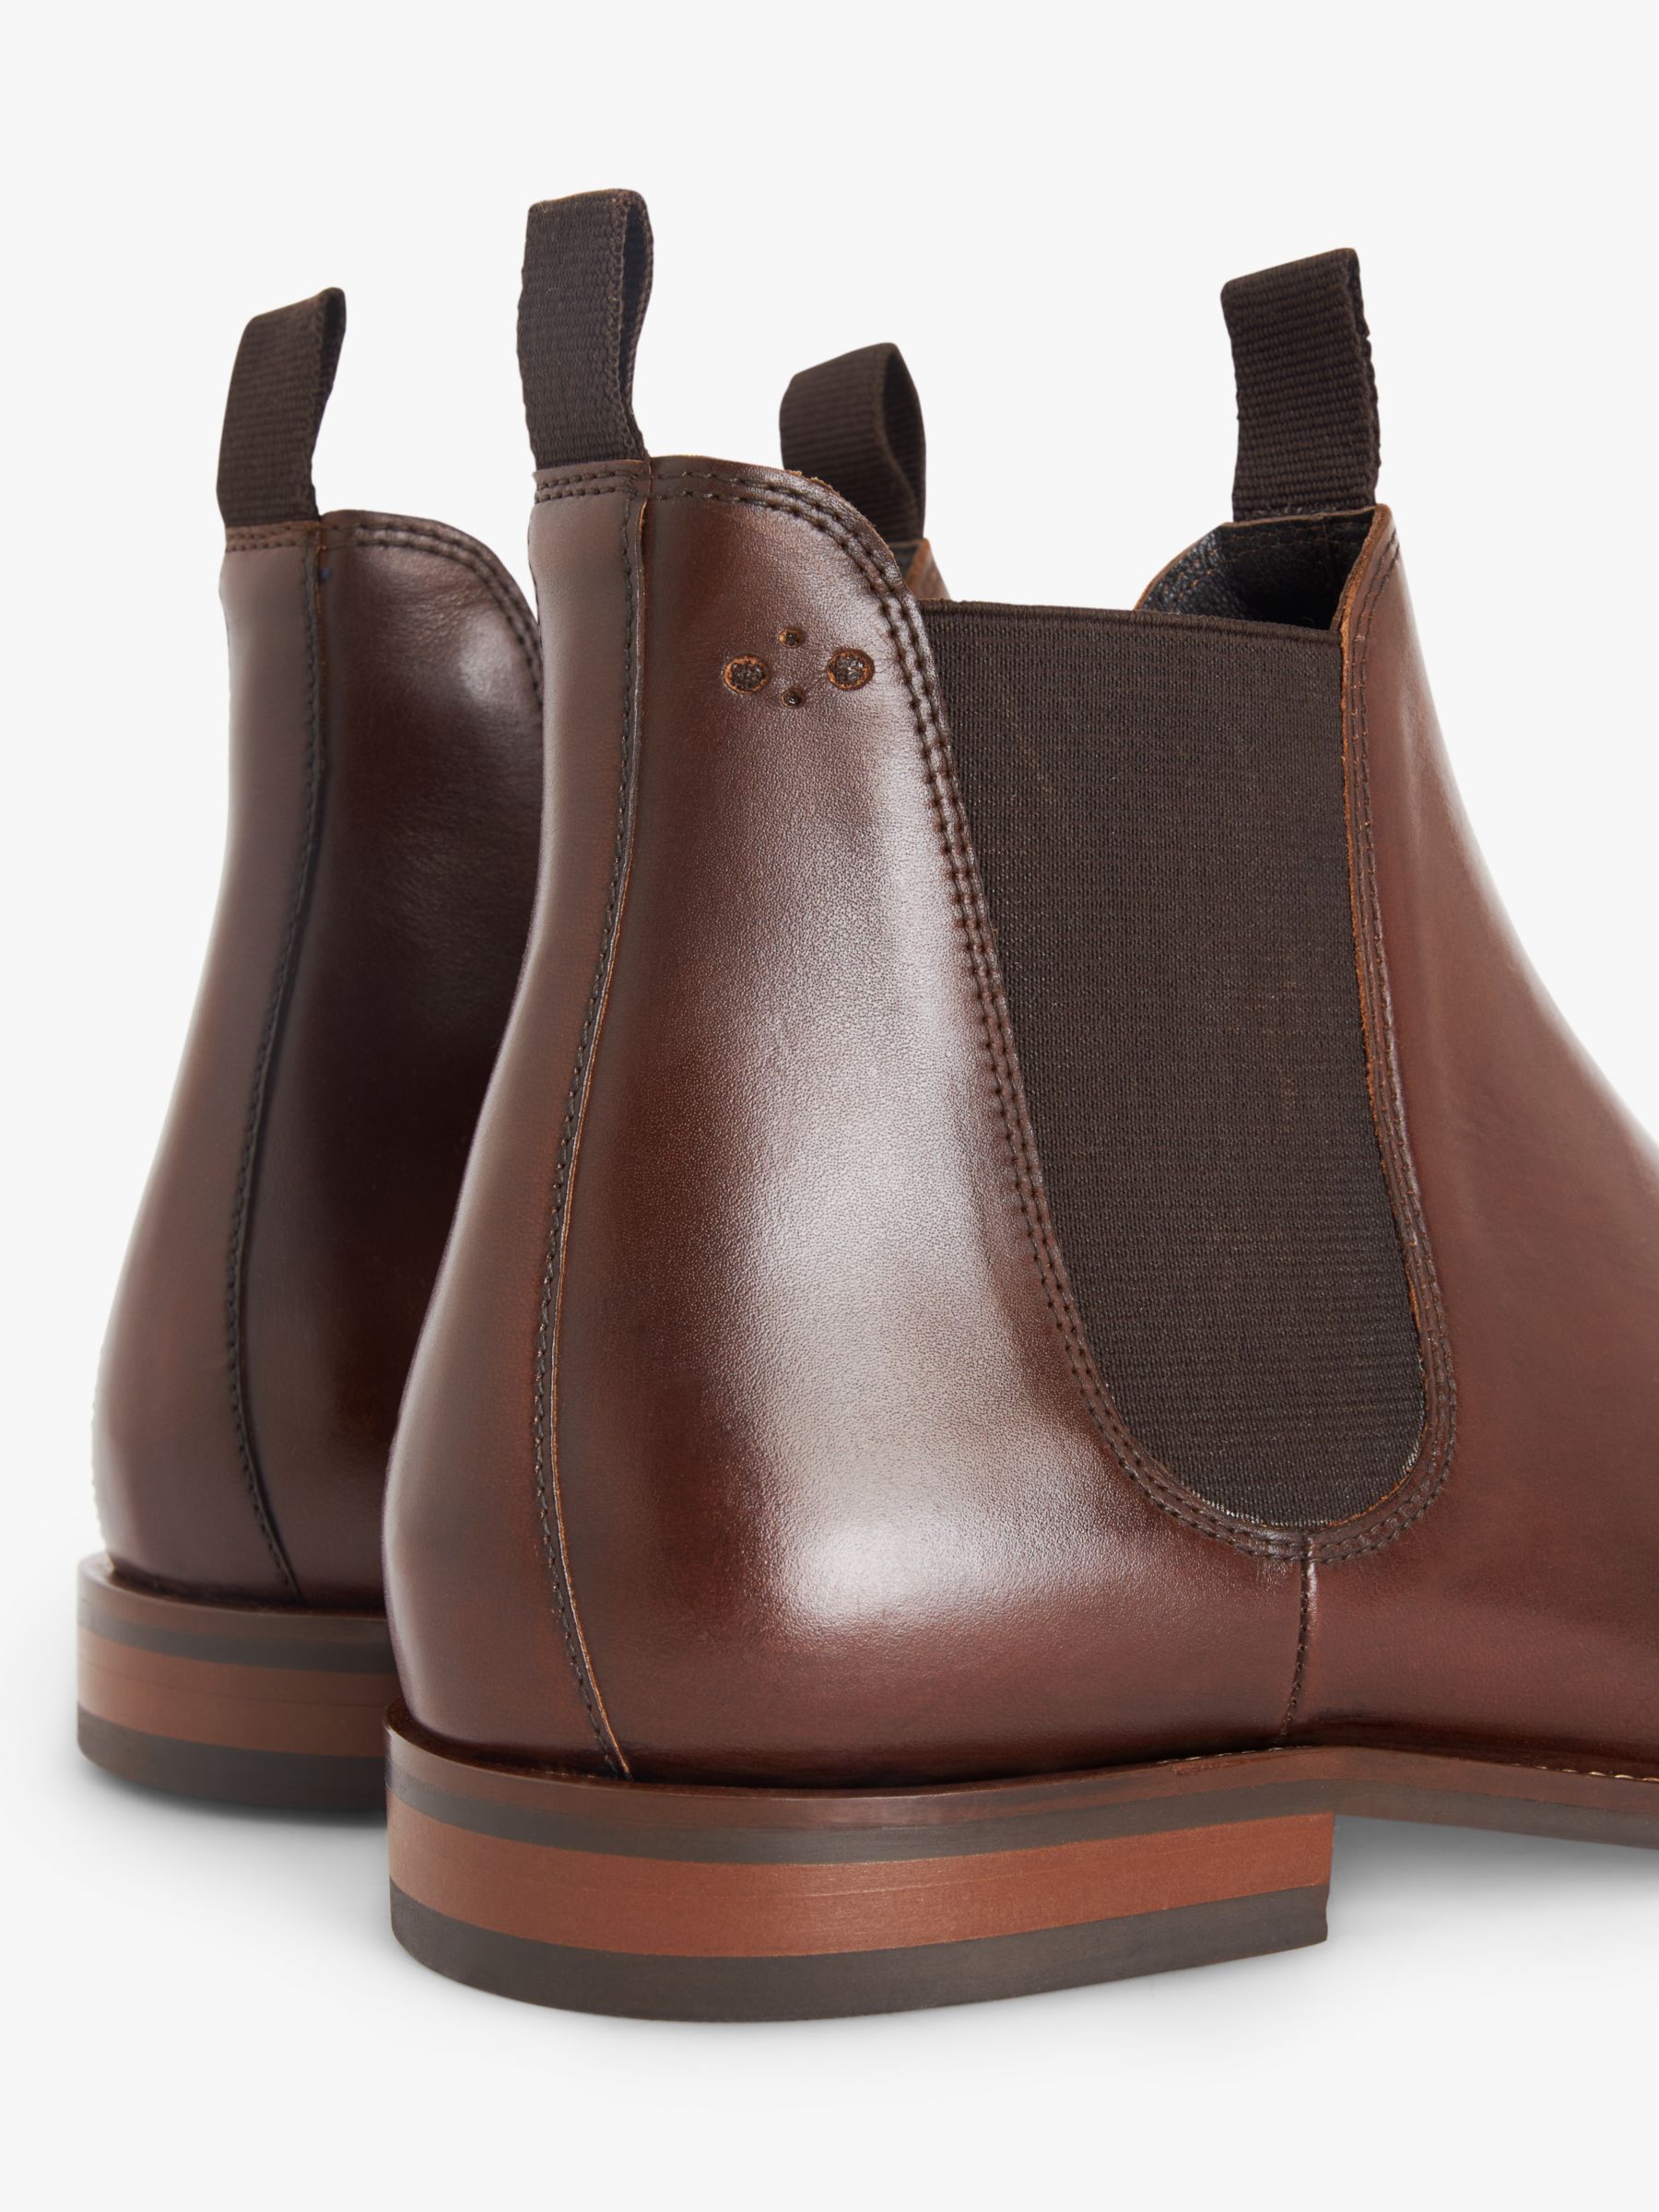 John Lewis Elsworth Leather Chelsea Boots, Dark Brown, 7